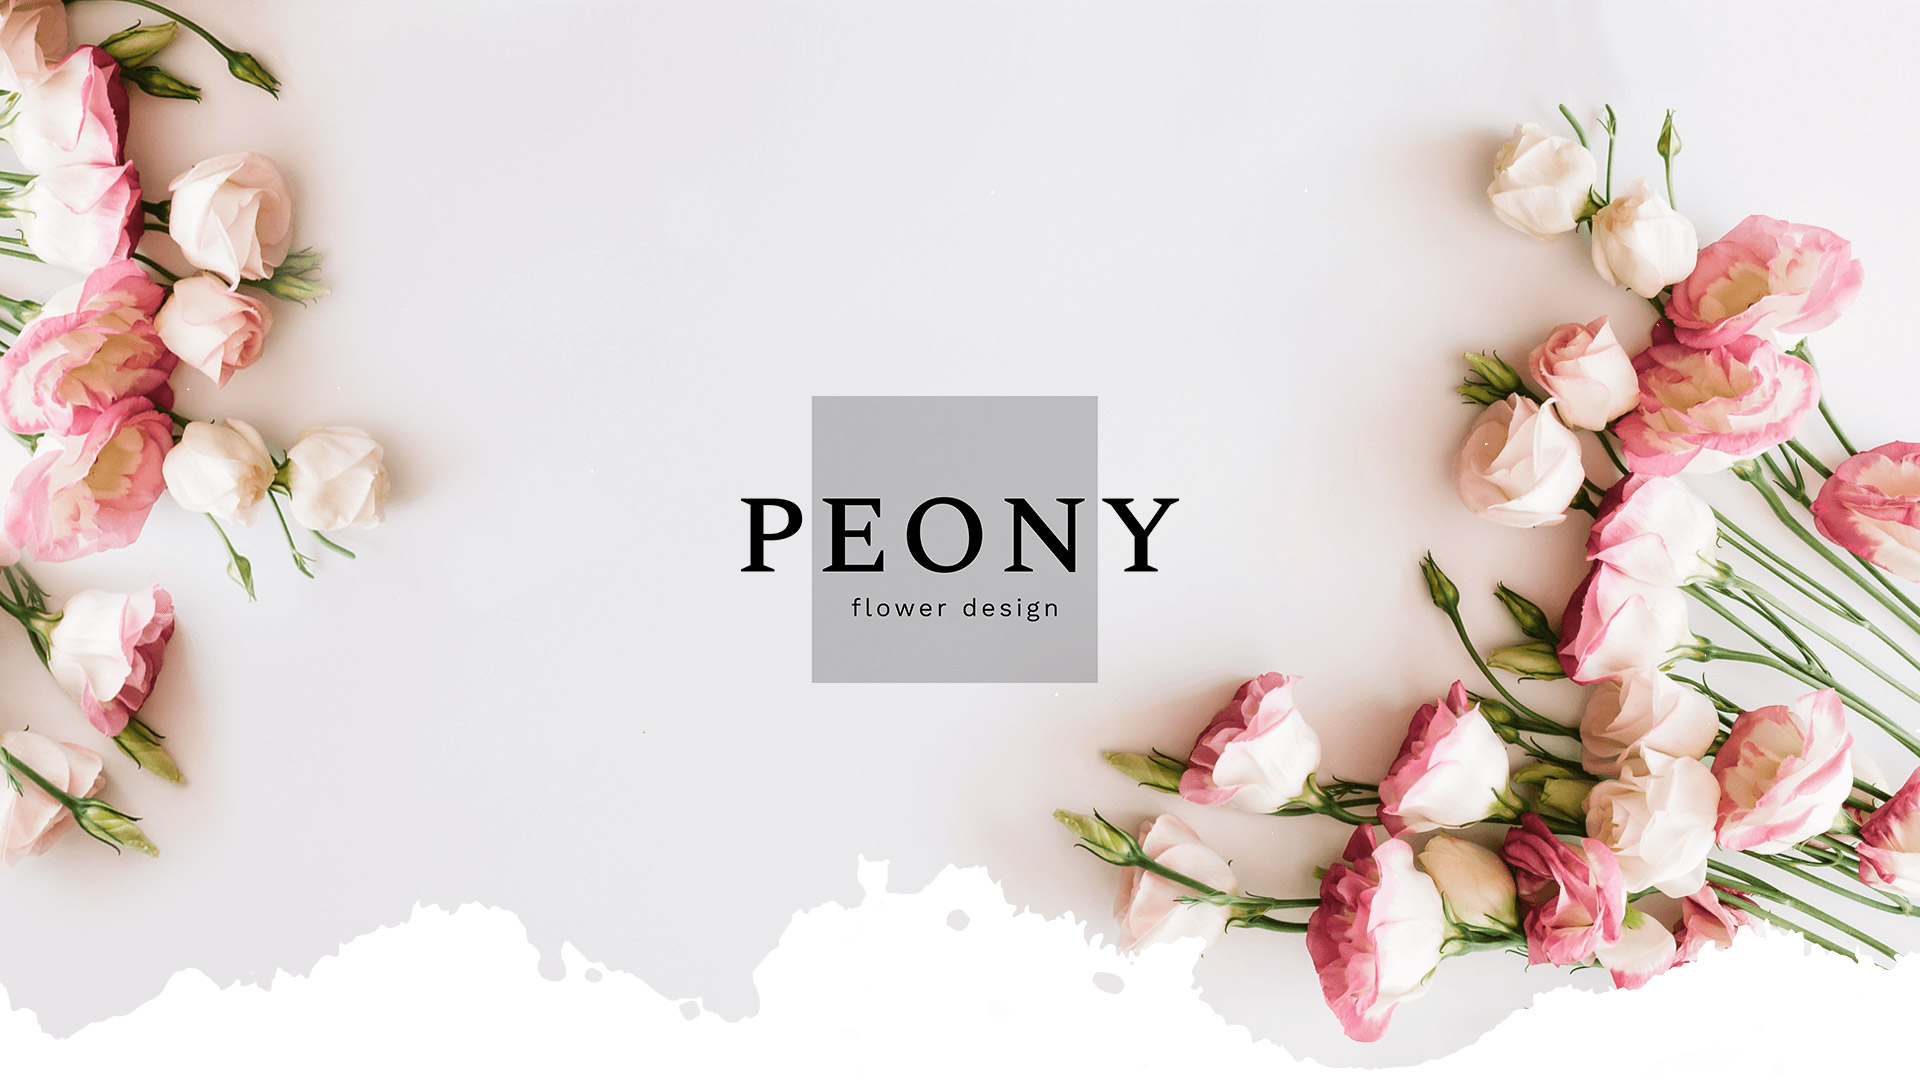 PEONY | FLOWER DESIGN